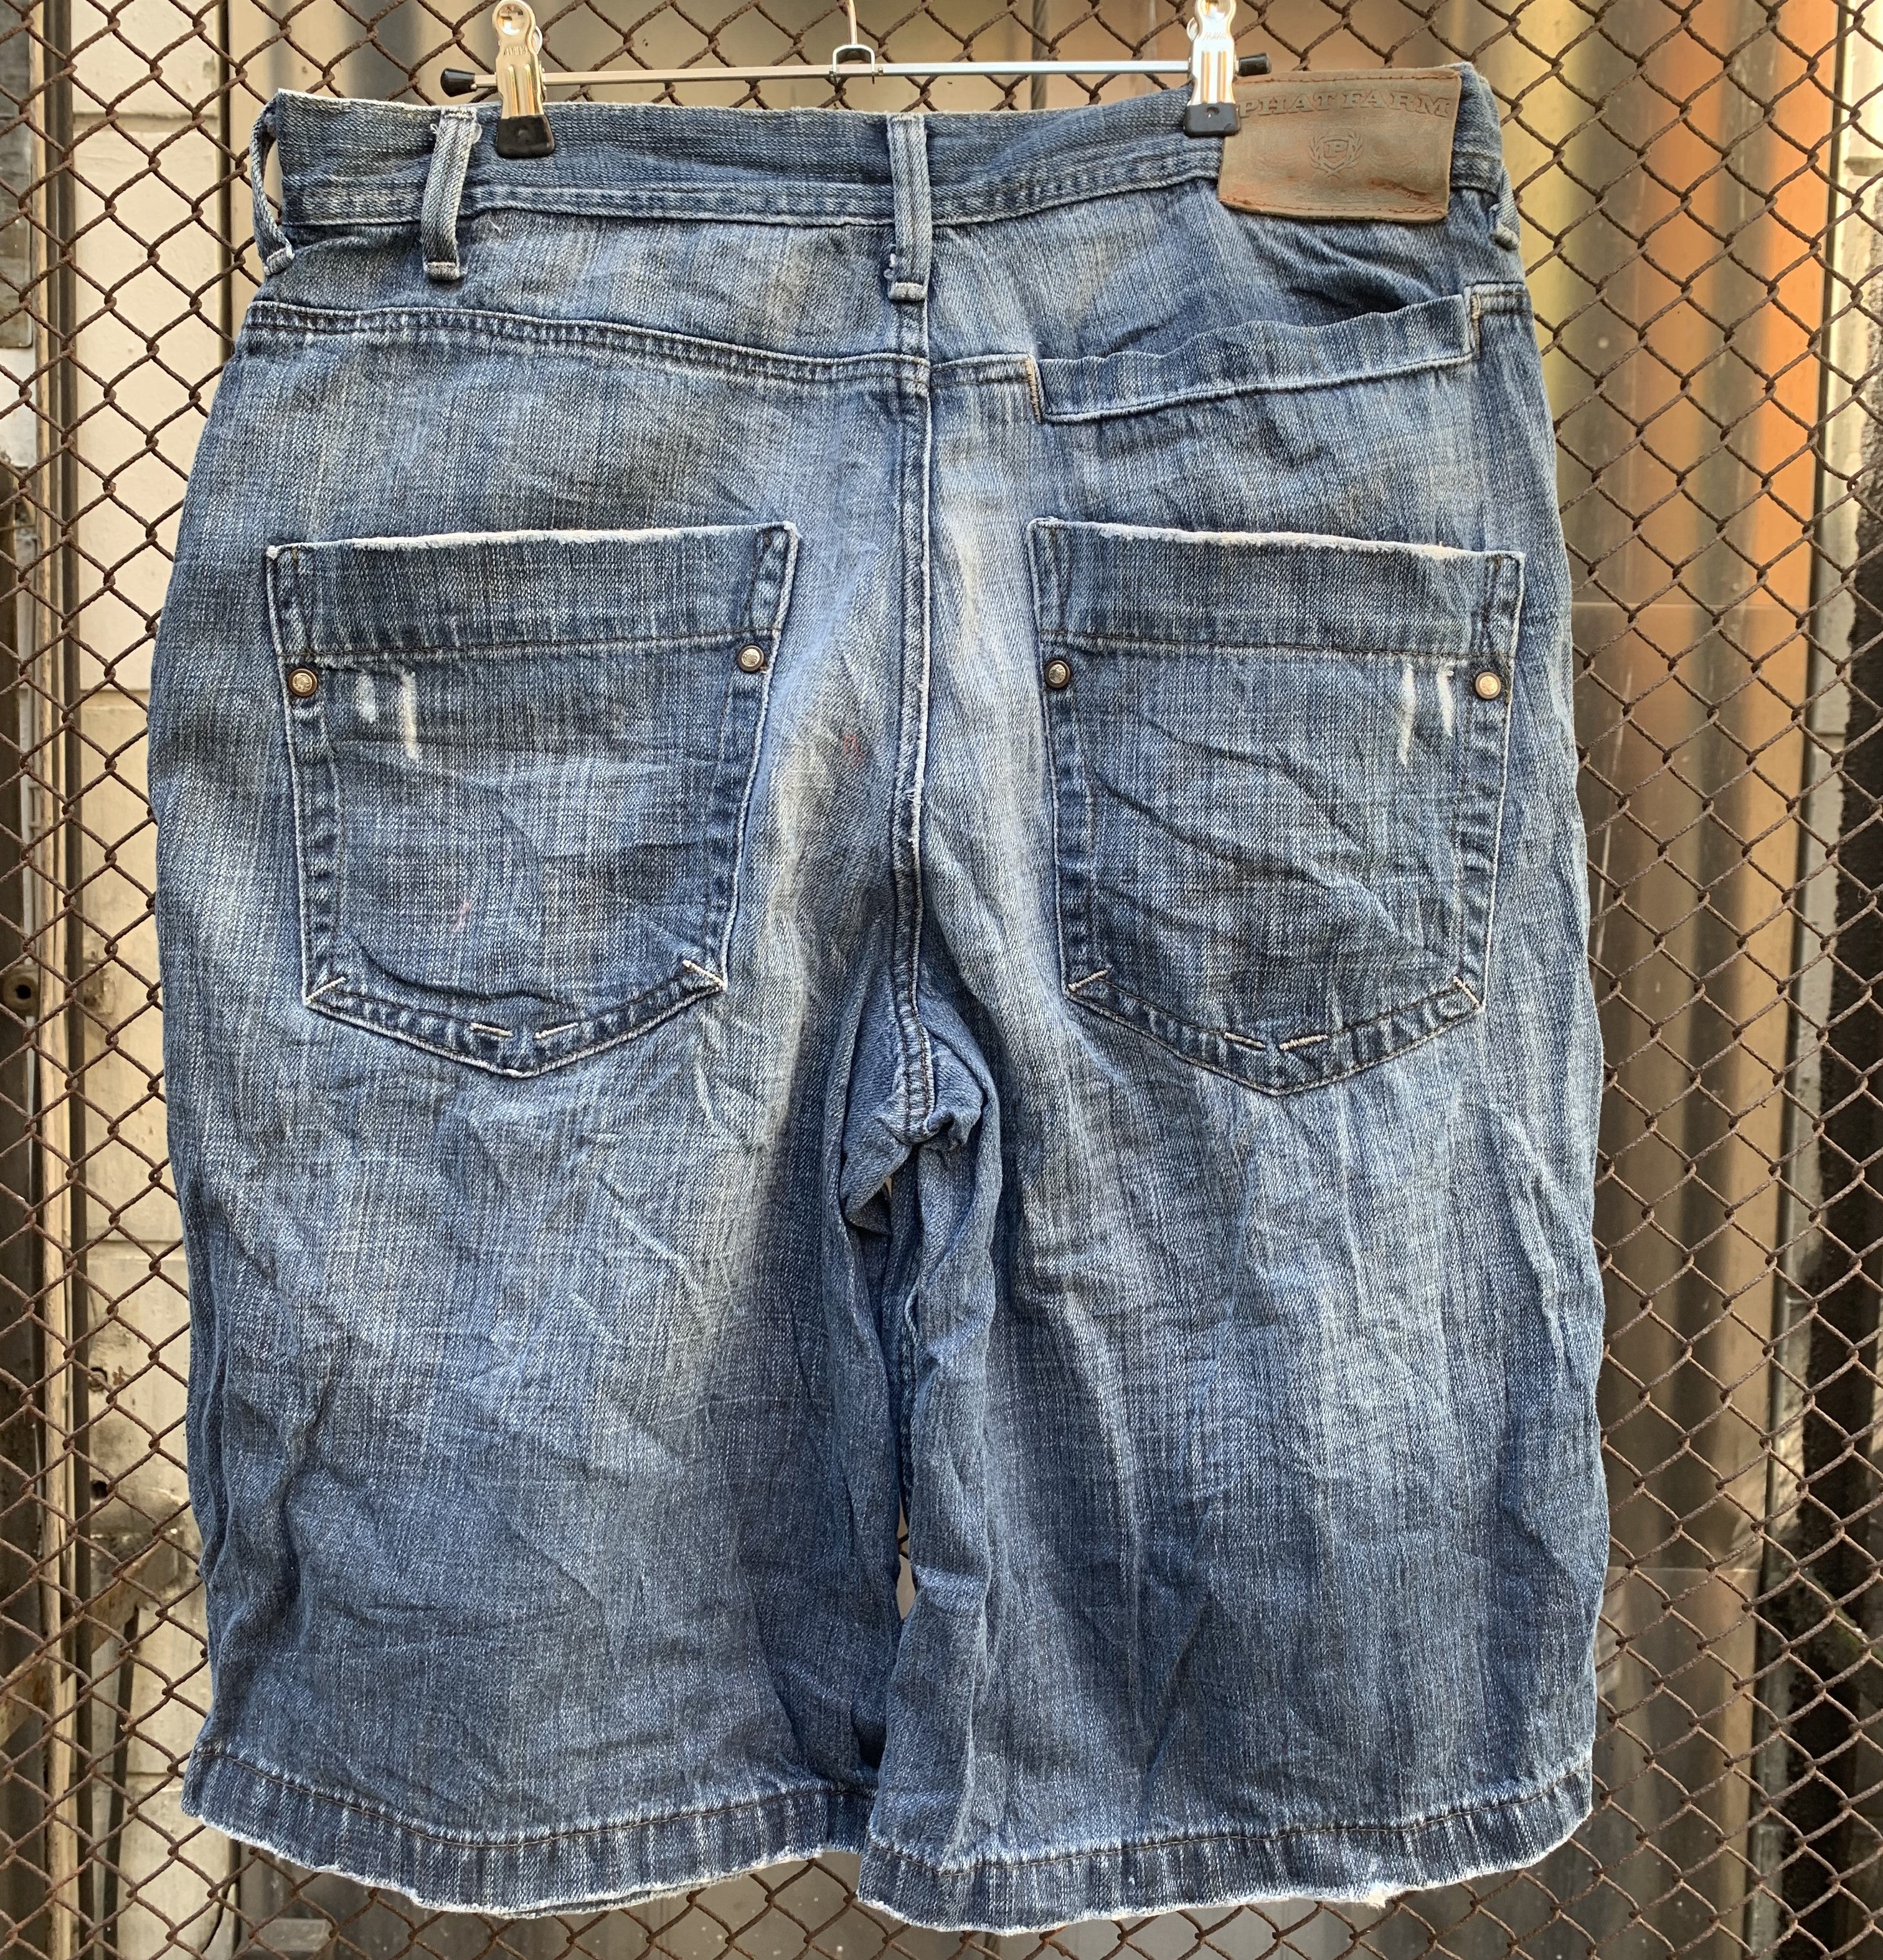 albert gagnon add photo phat farm jean shorts